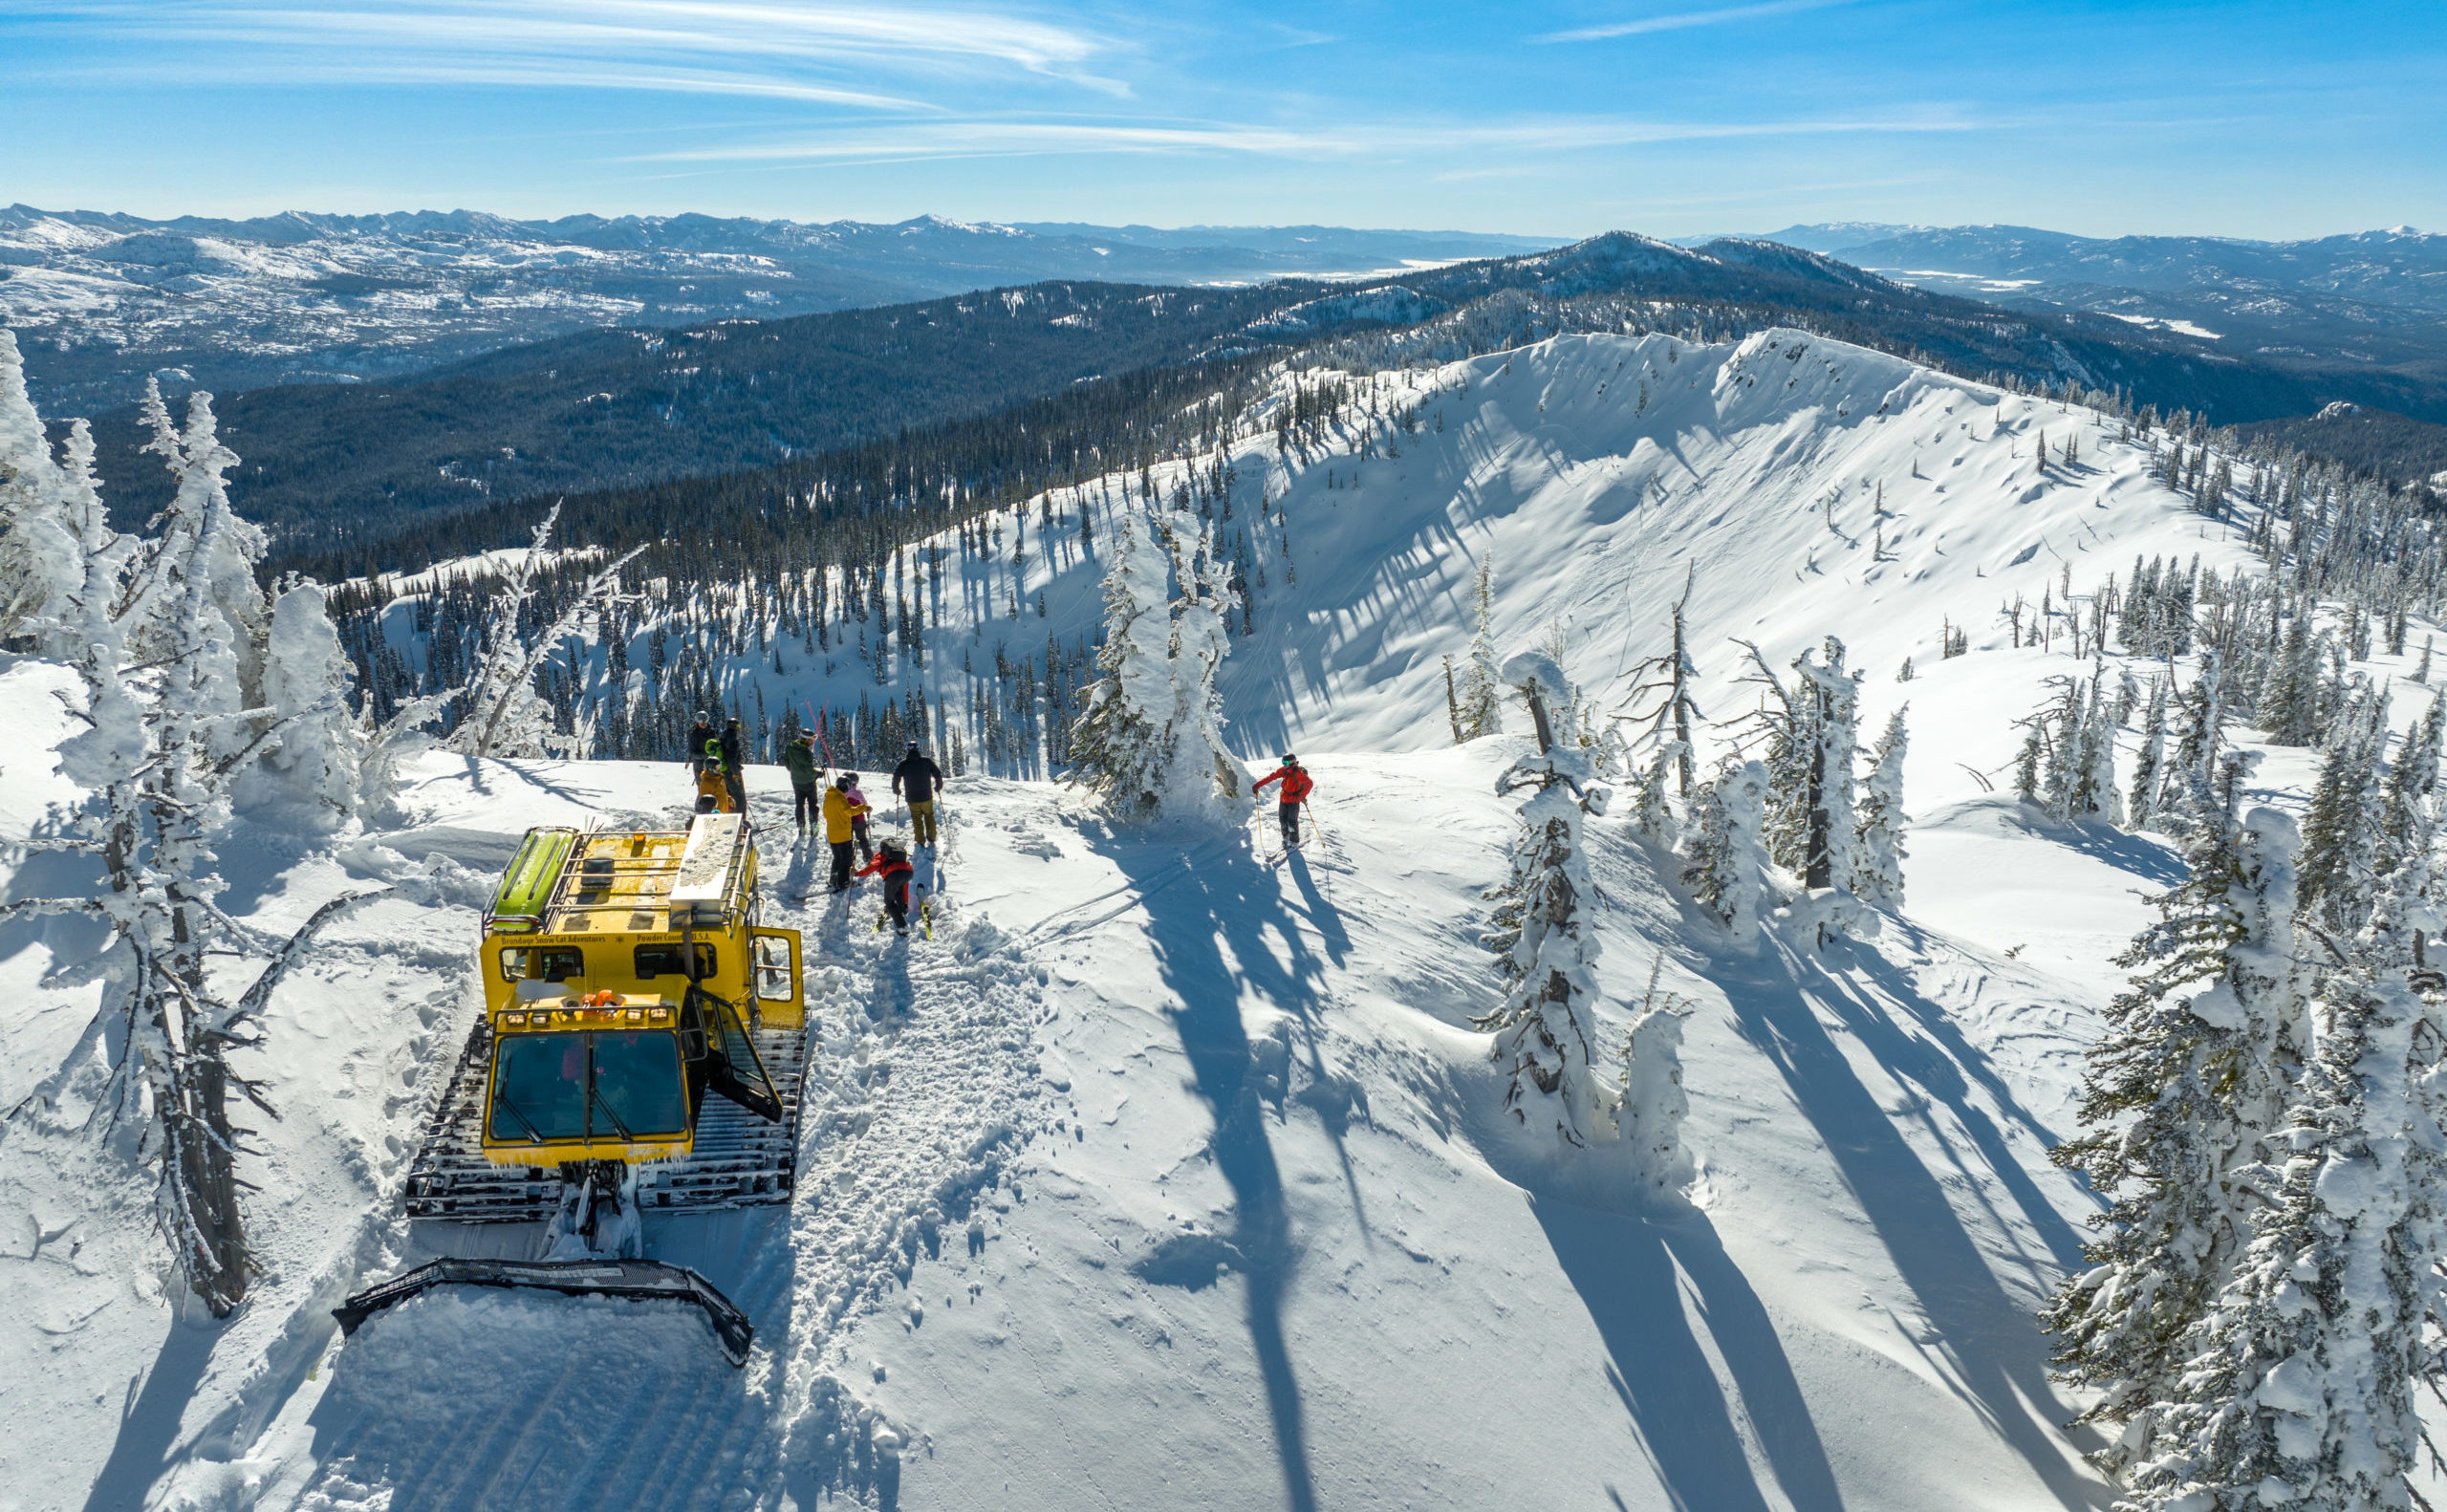 Idaho Ski Resort Brundage Mountain - The Best Snow in Idaho